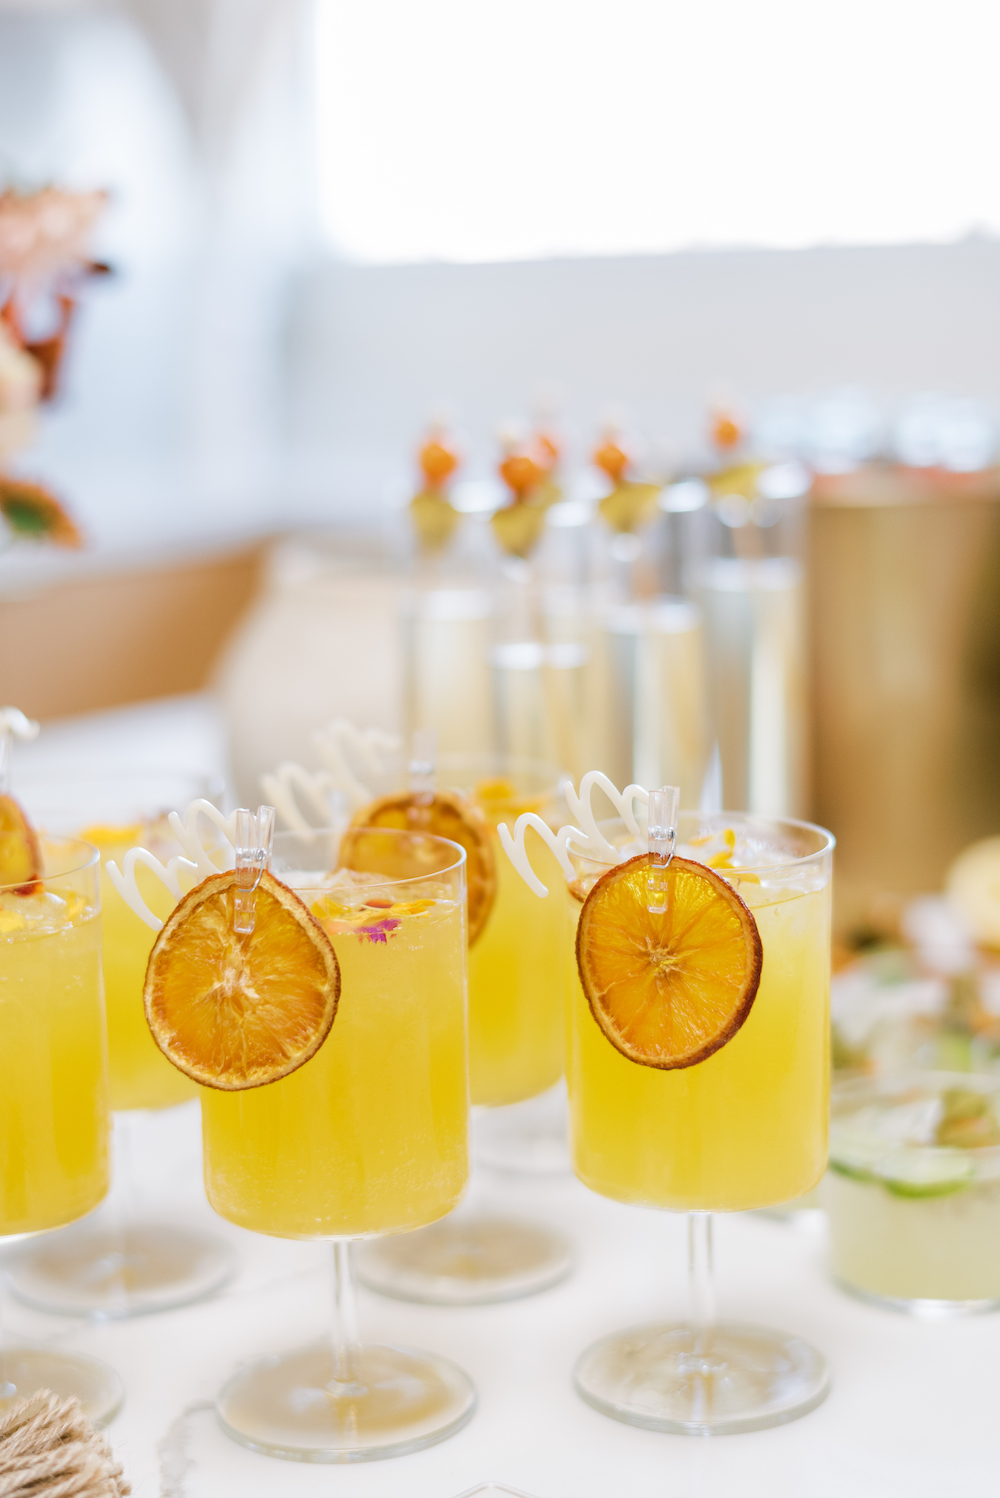 A fruity lemon cocktail